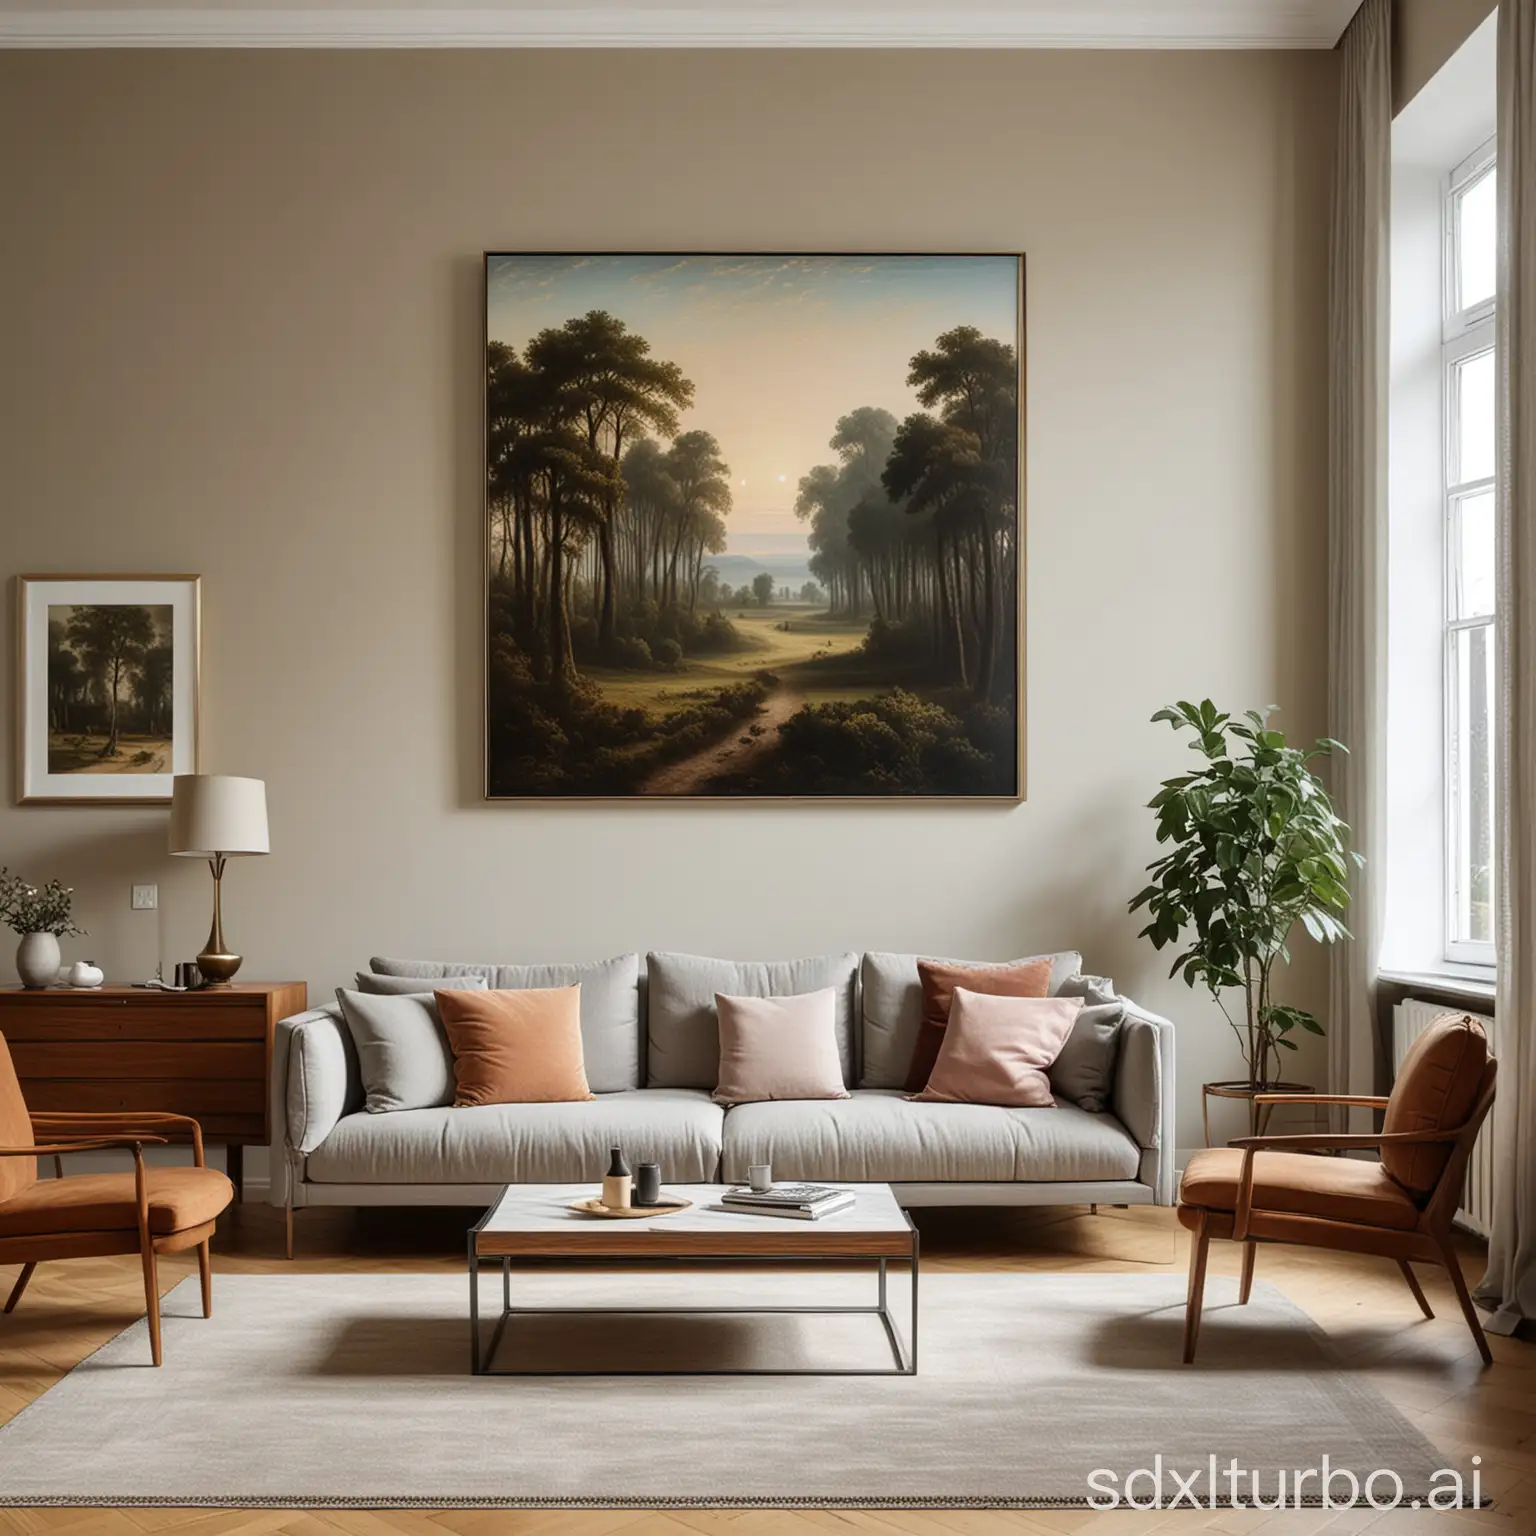 Modern-Berlin-Apartment-Living-Room-with-Caspar-David-Friedrich-Painting